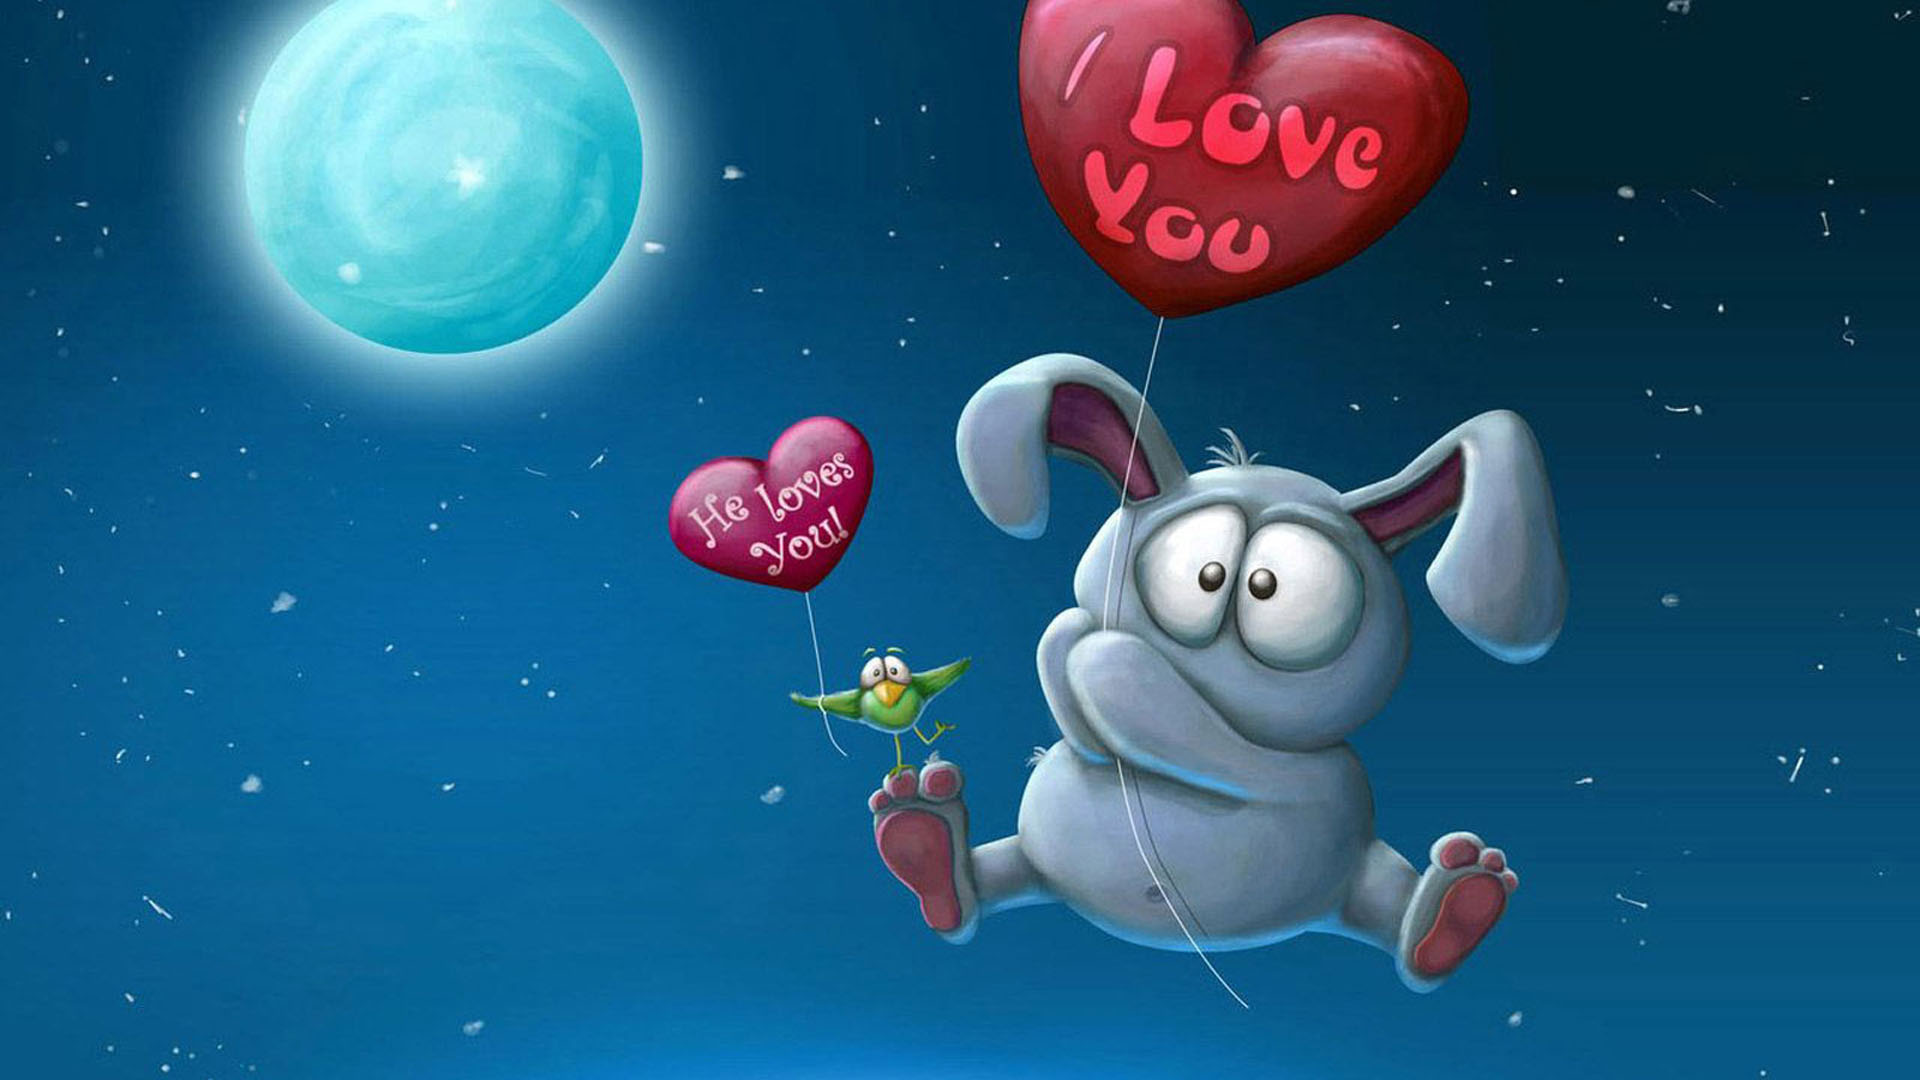 I Love You Cartoon HD Wallpaper of Love   hdwallpaper2013com